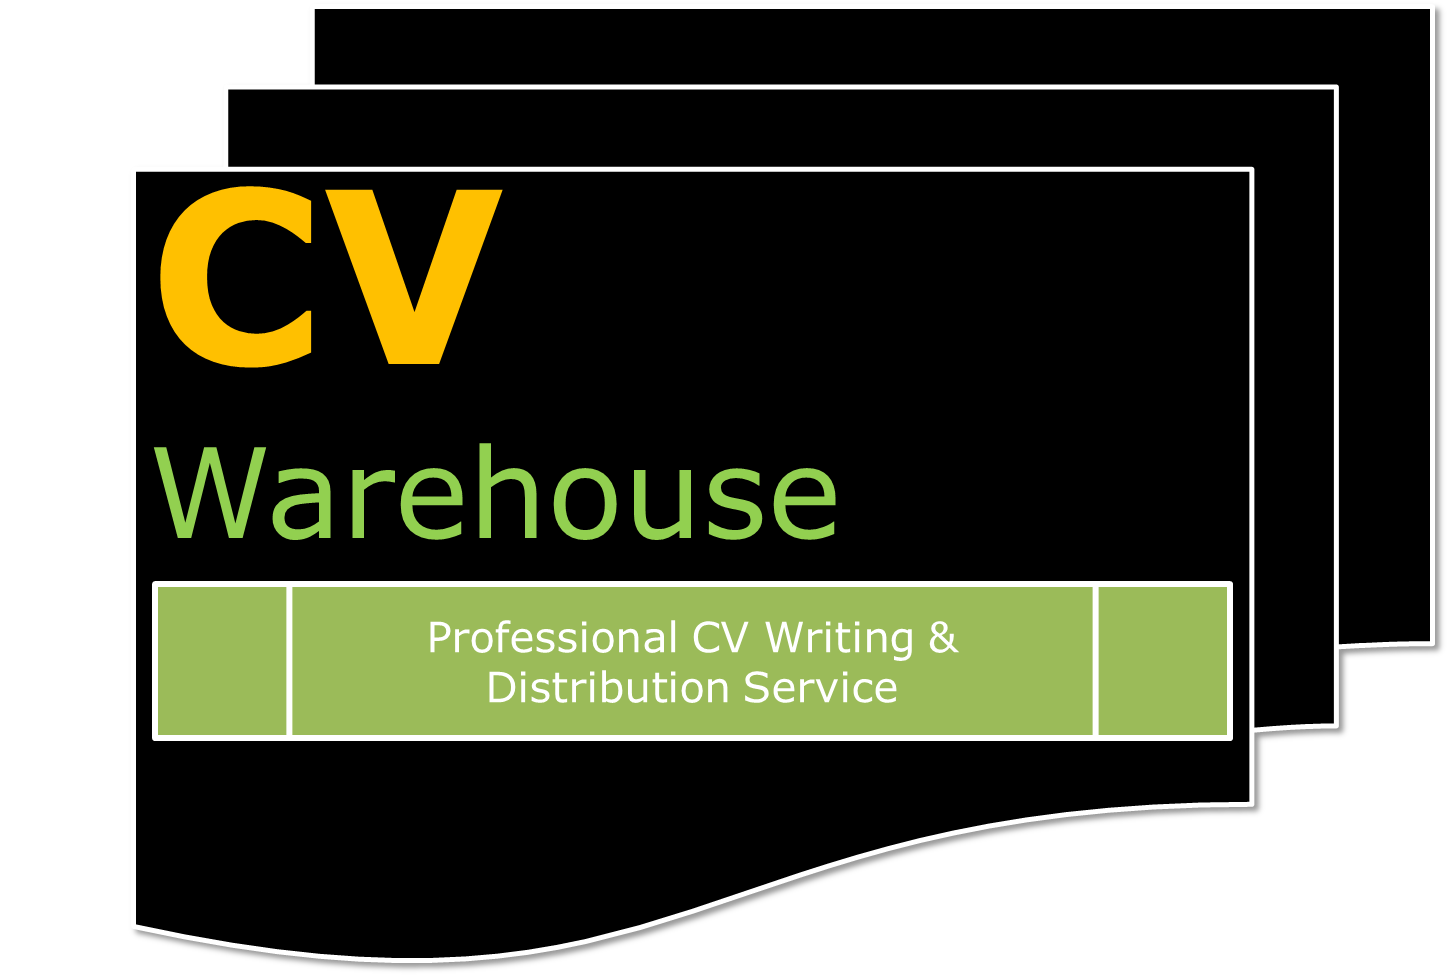 CV warehouse